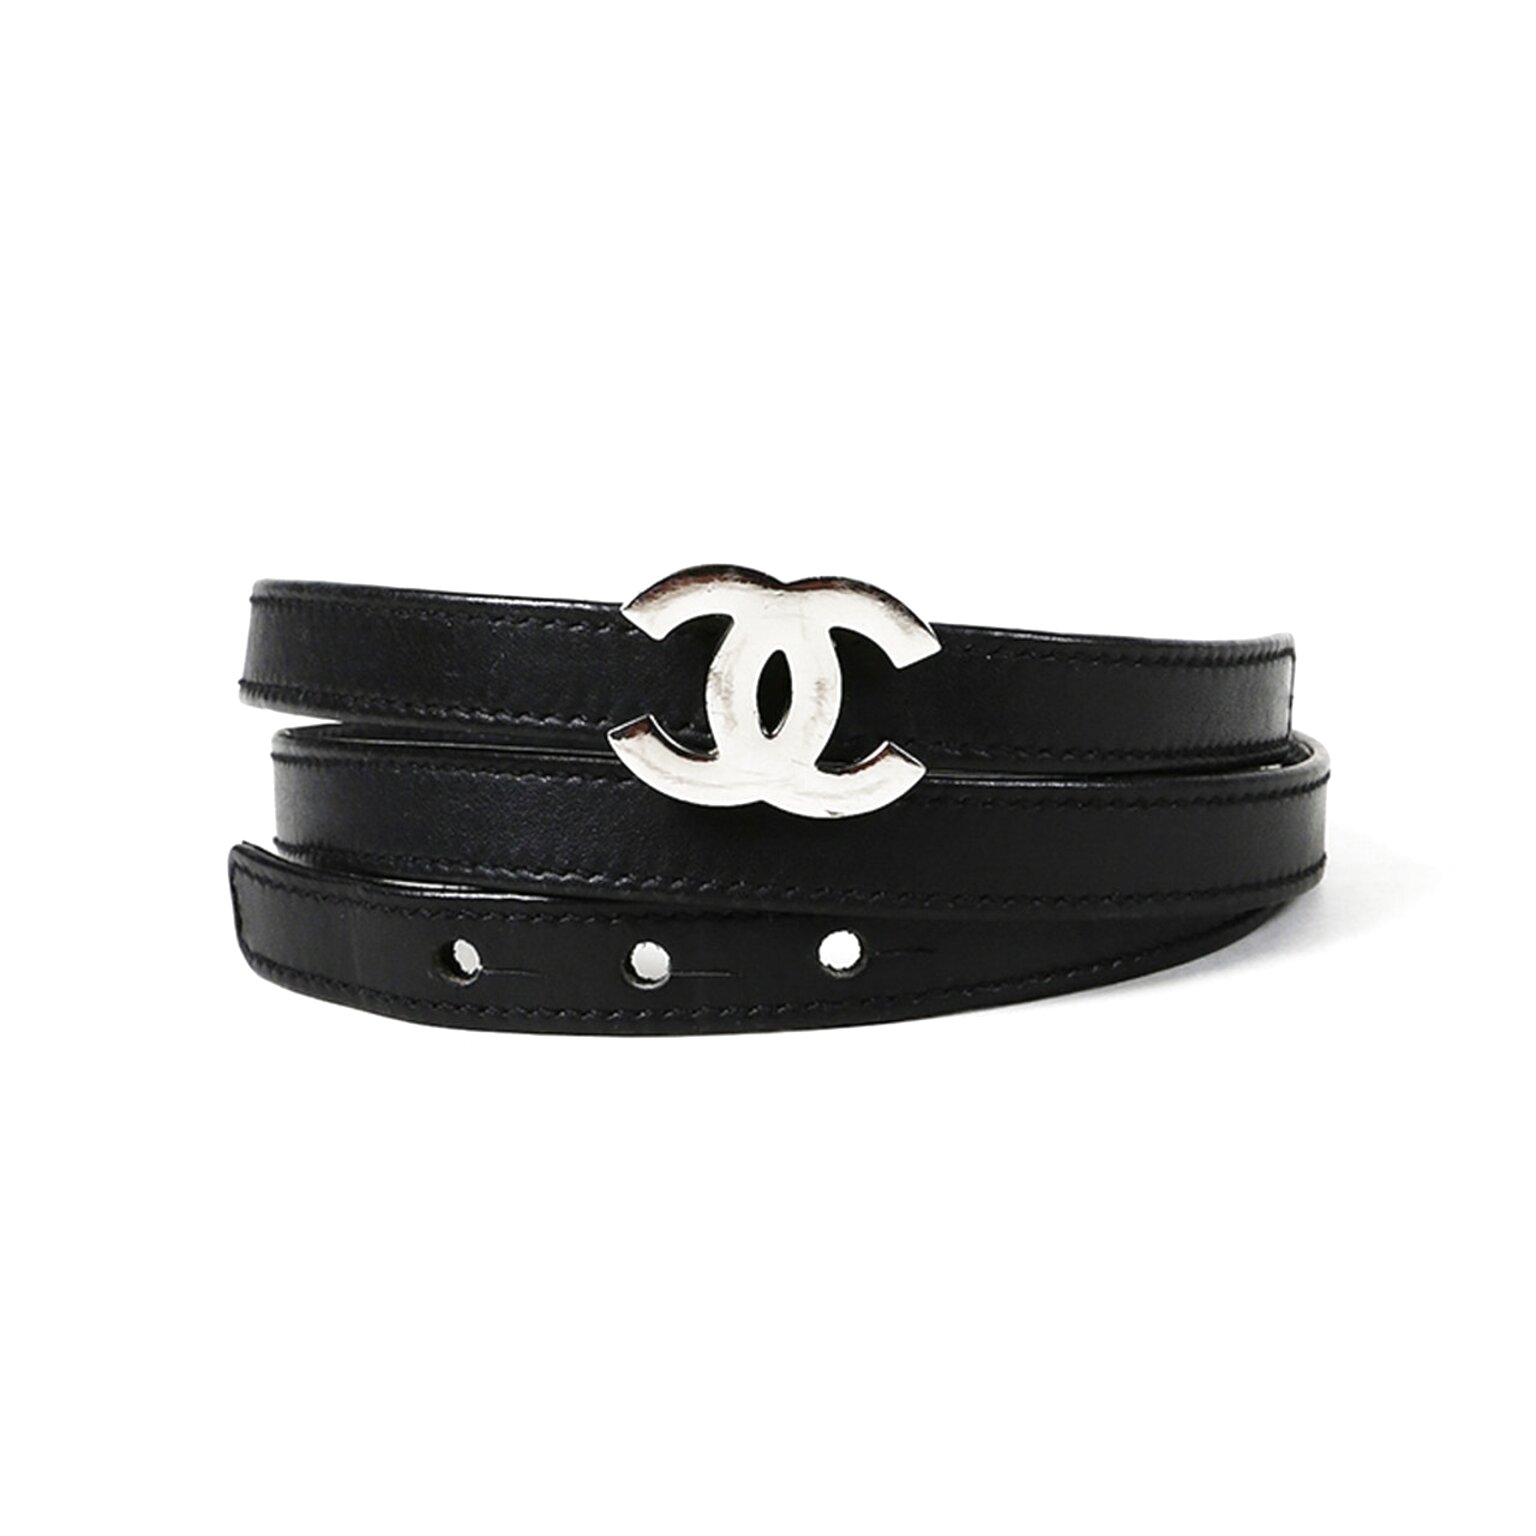 Chanel Belt for sale in UK | 65 used Chanel Belts